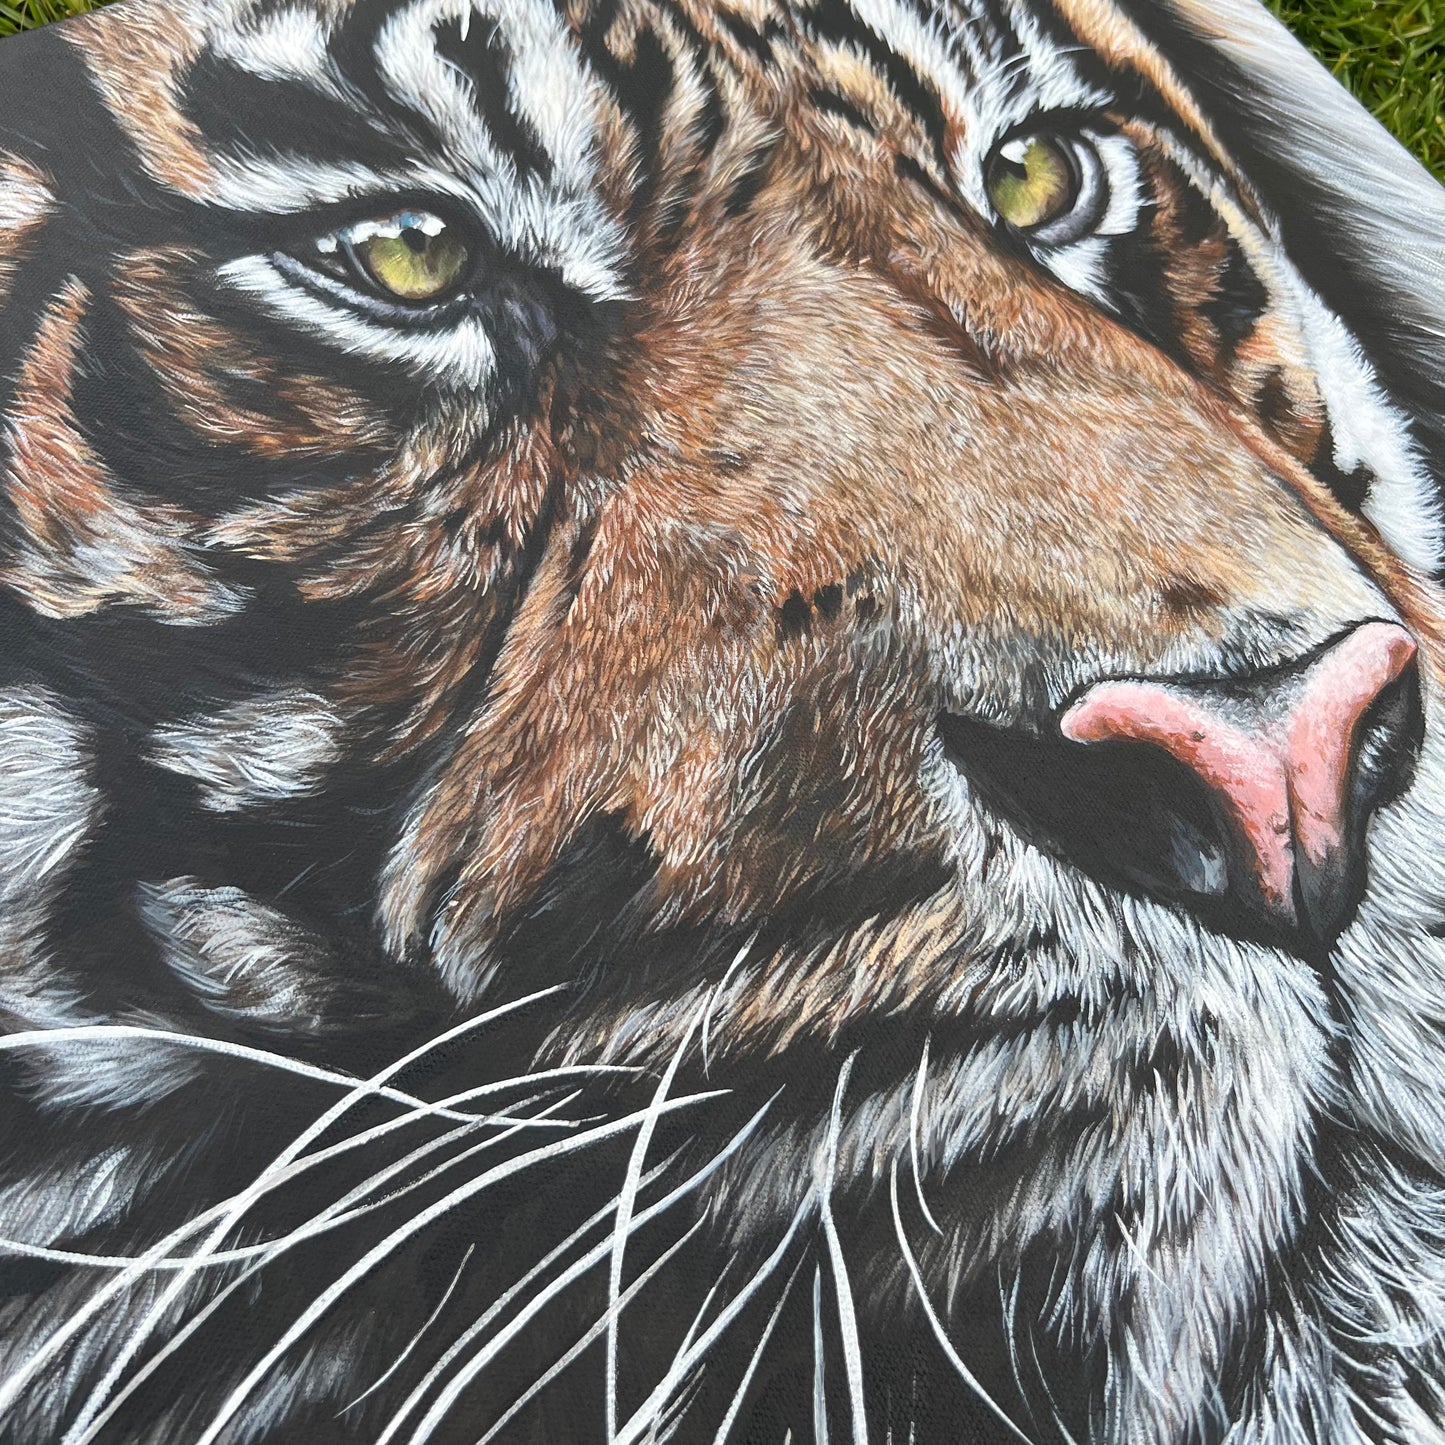 ORIGINAL Tiger Acrylic Painting